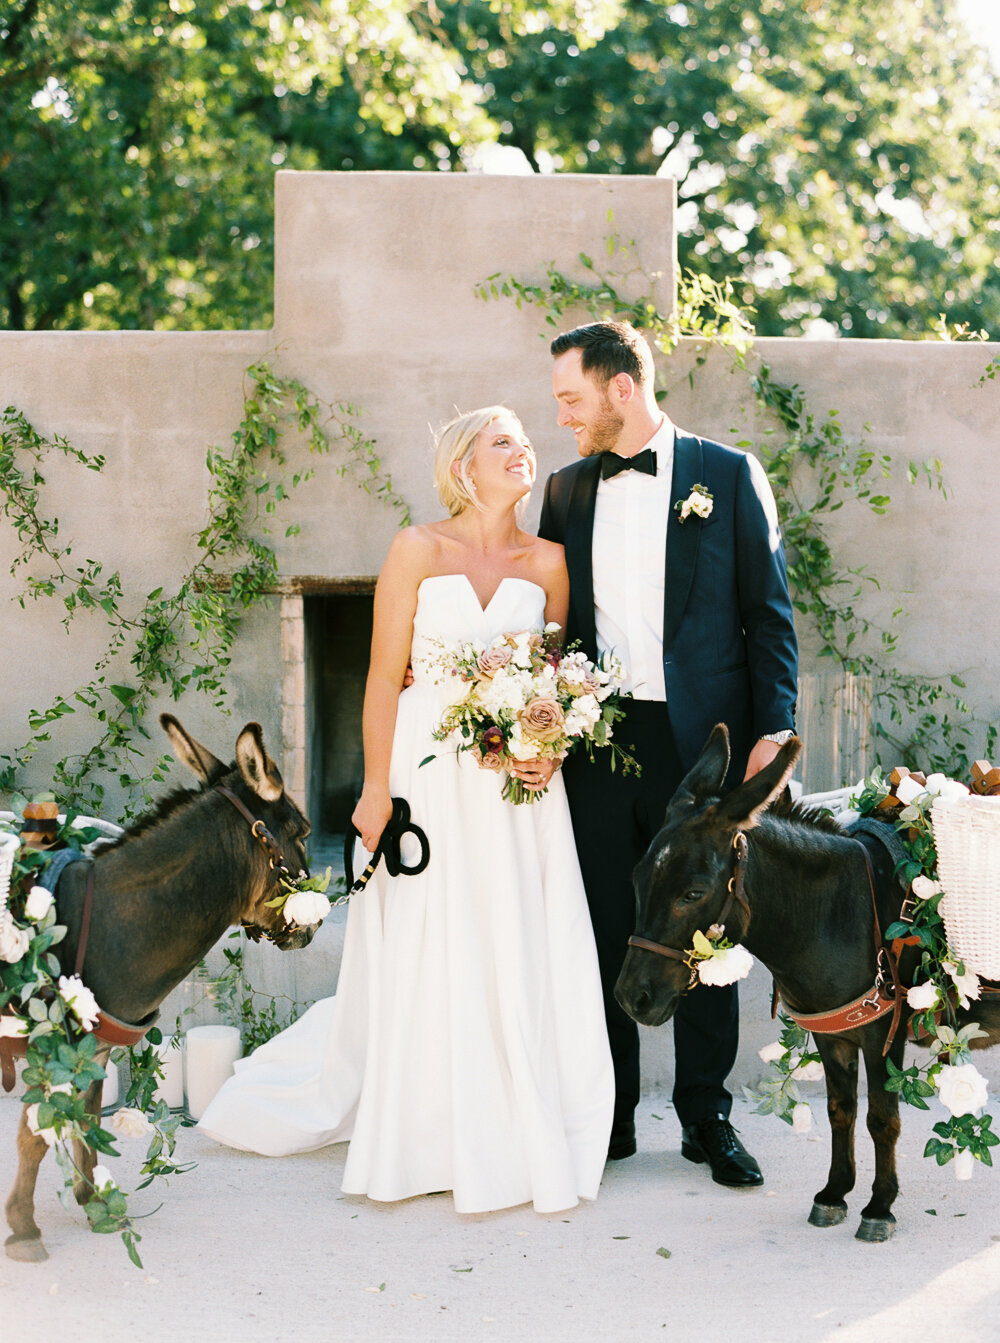 Fredericksburg Wedding by Courtney Leigh Photography, Beer Donkeys at a Texas Wedding